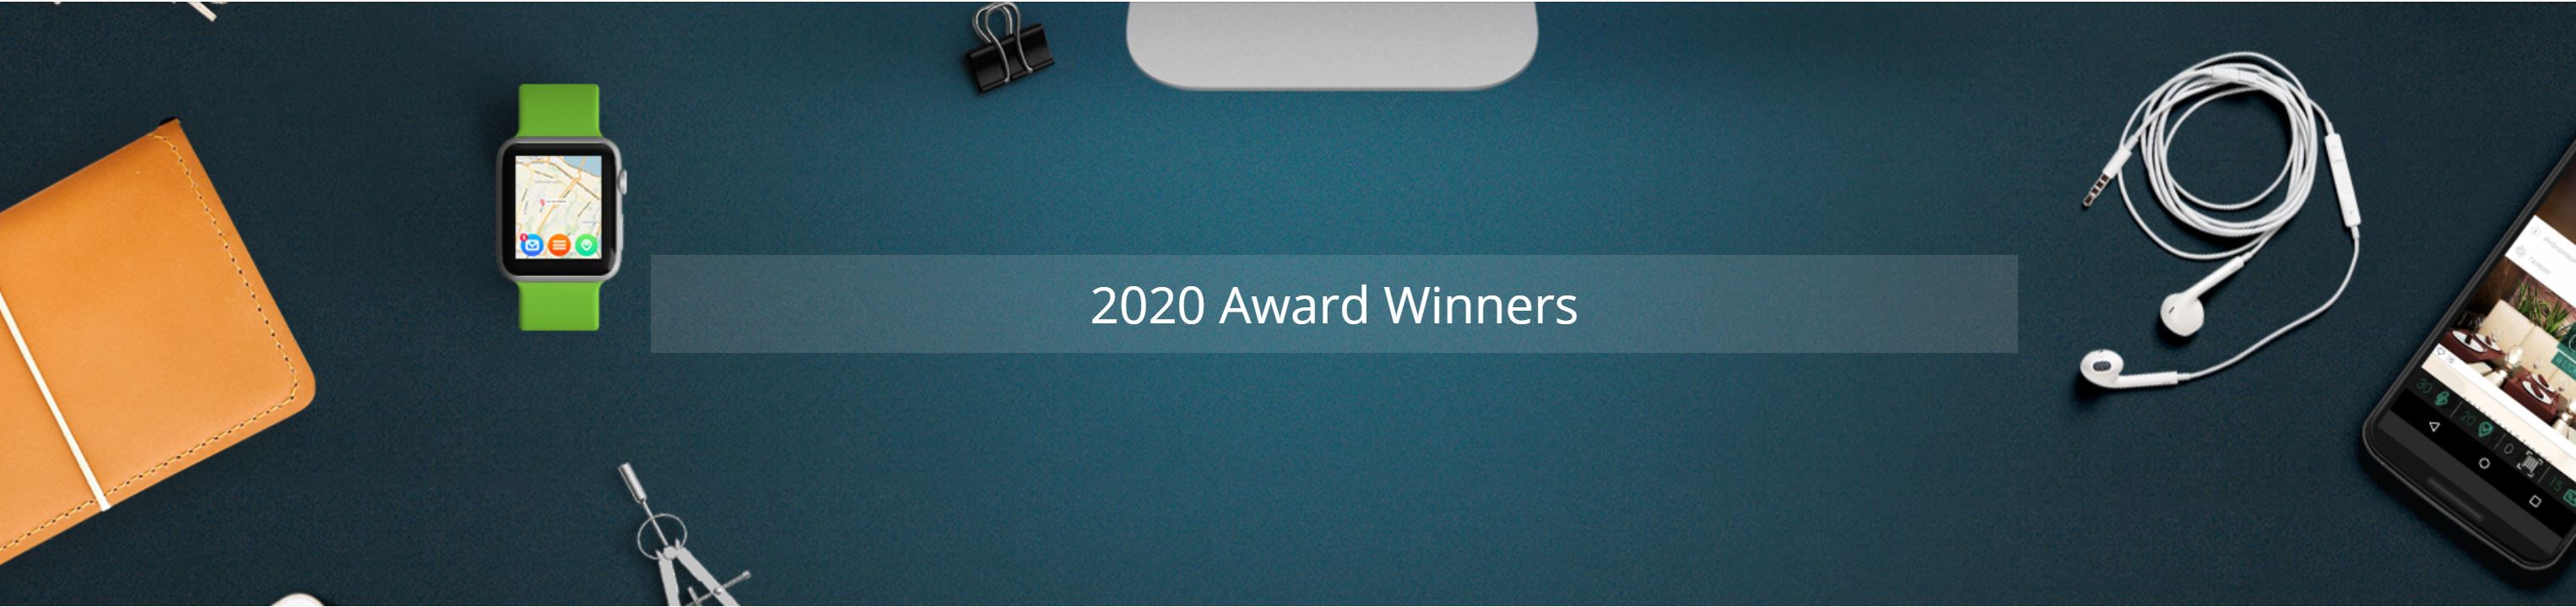 2020 AWARD WINNERS